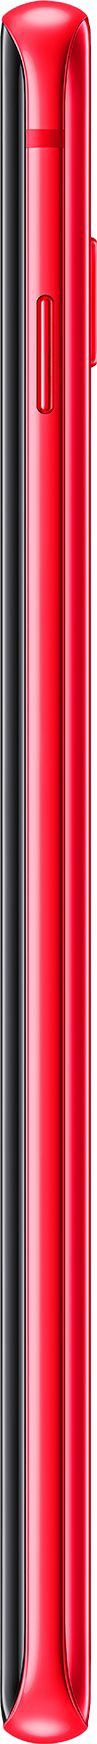 Смартфон Samsung Galaxy S10 8/128GB Red (Красный)